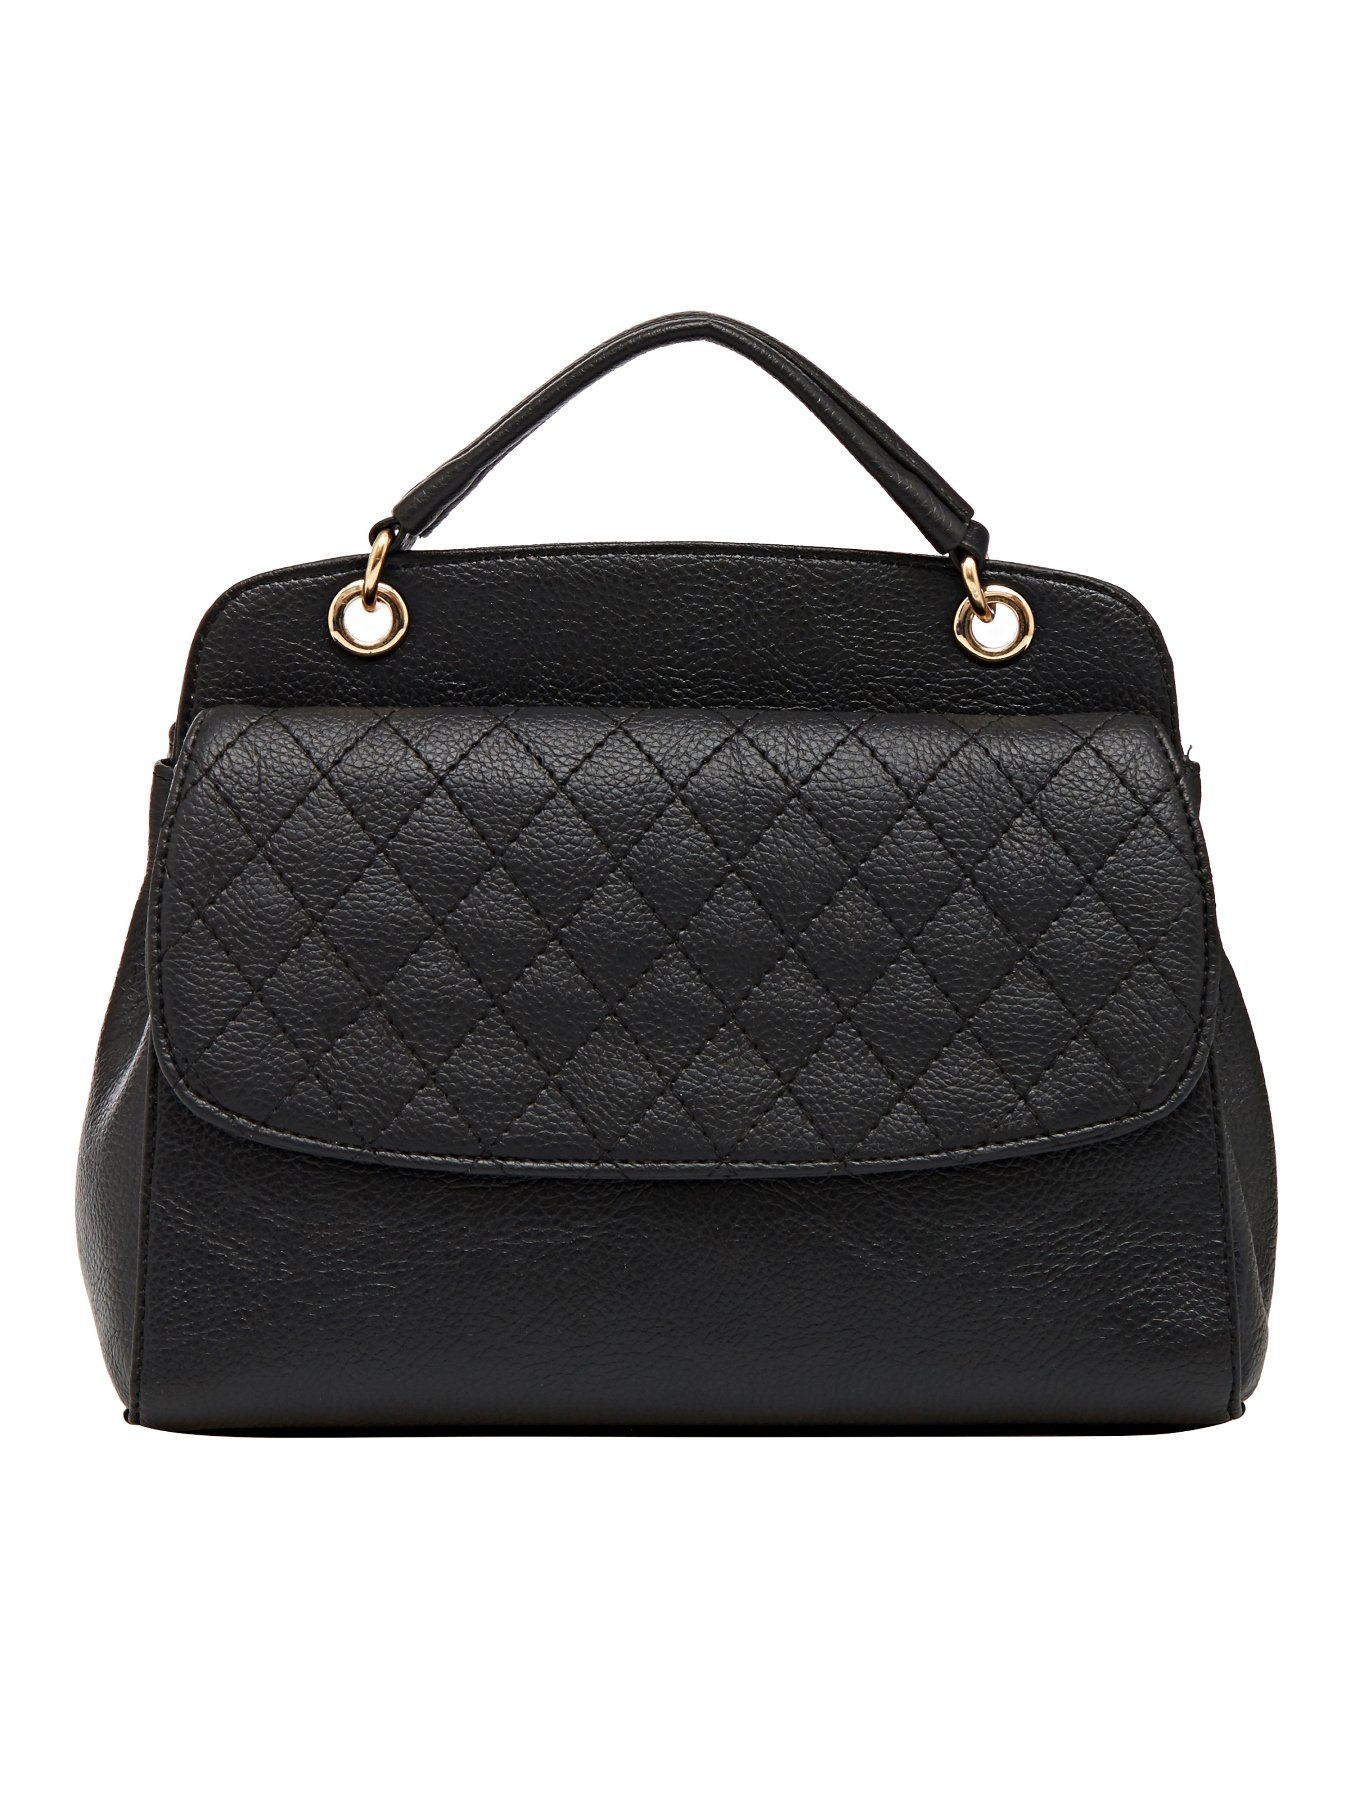 ESBEDA Black Checked Pu Synthetic Material Handbag For Women - ESBEDA